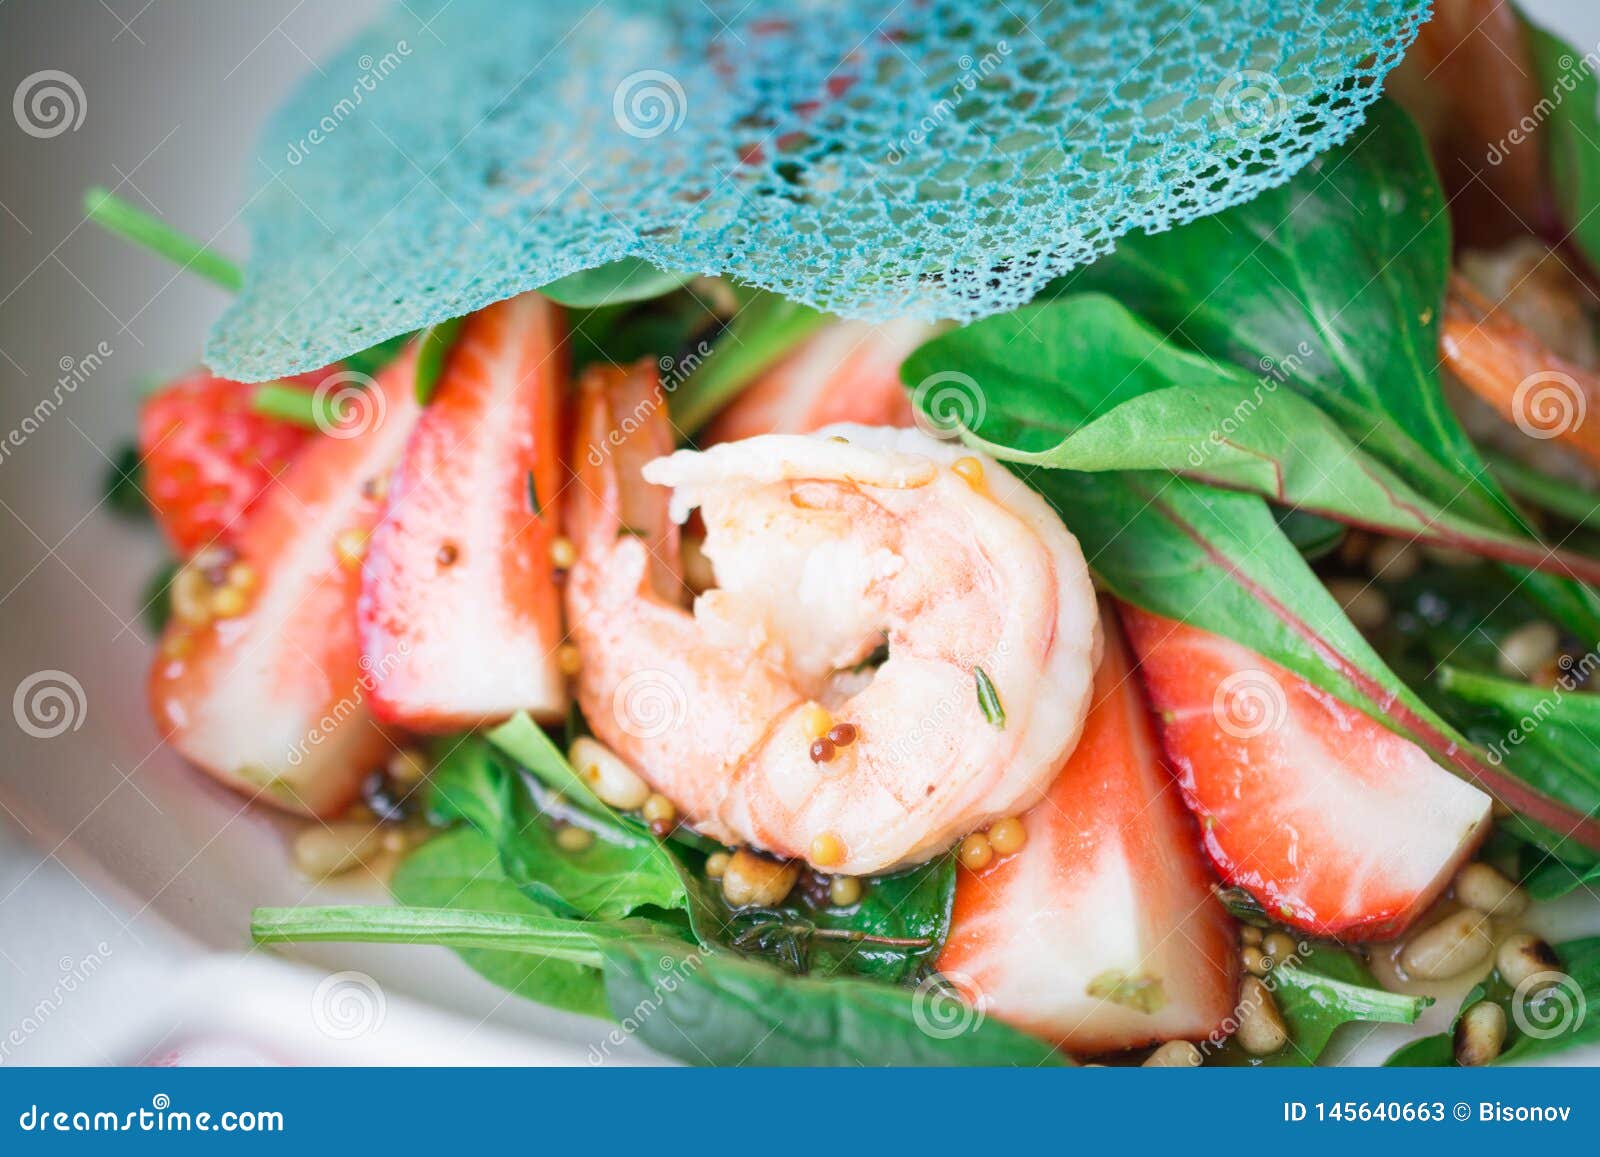 Closeup Photo of Salad with Tiger Prawns Stock Image - Image of ...